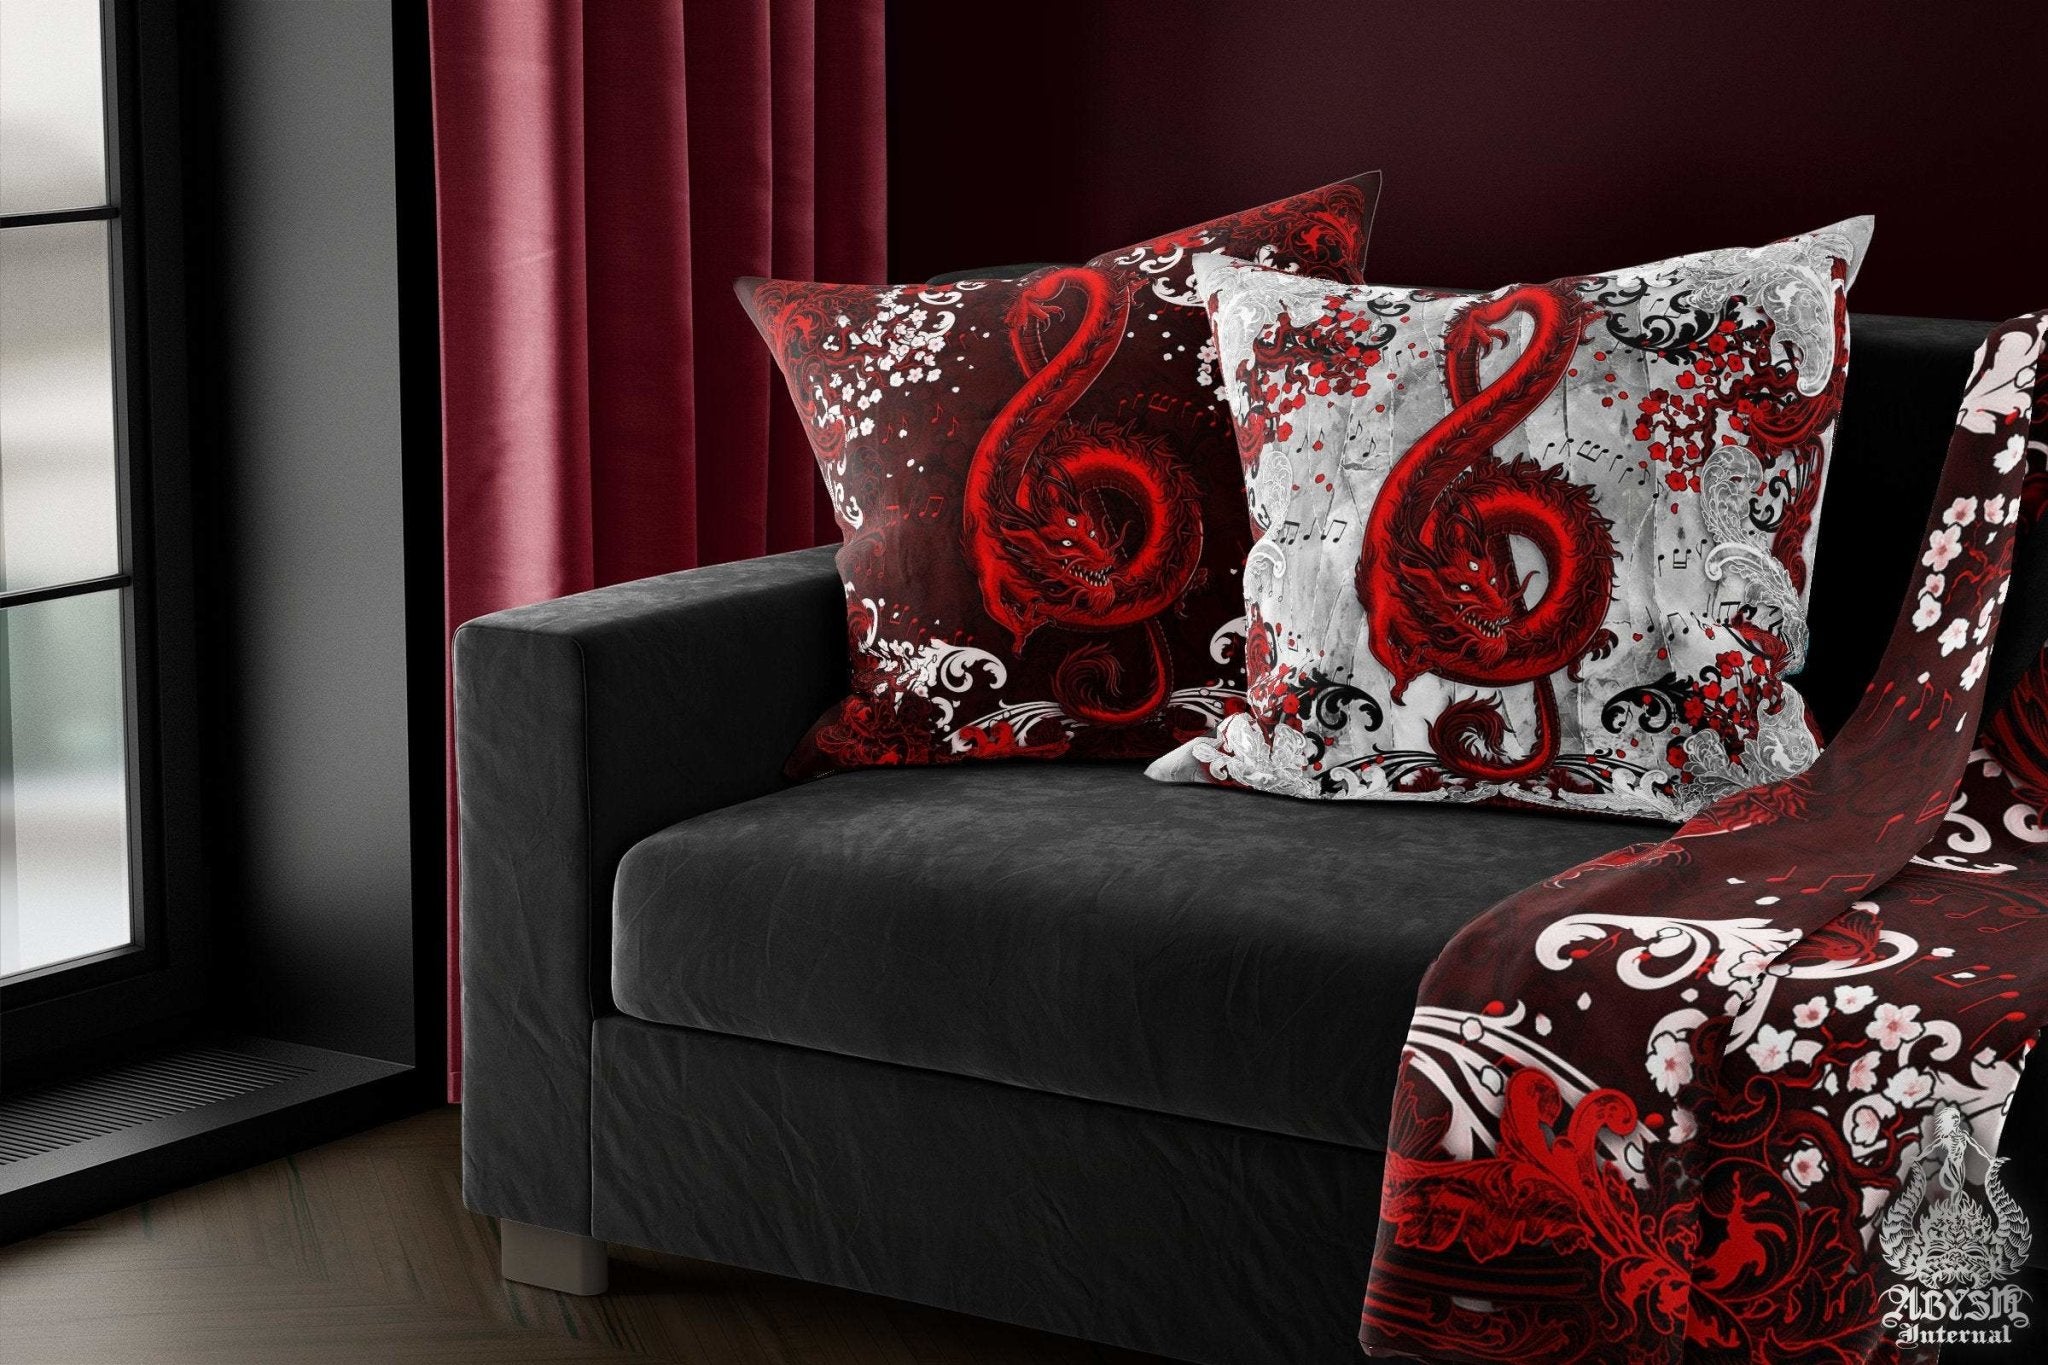 Red Dragon Throw Pillow, Decorative Accent Cushion, Gothic Room Decor, Music Art, Alternative Home - Treble Clef, Bloody Goth, Black - Abysm Internal